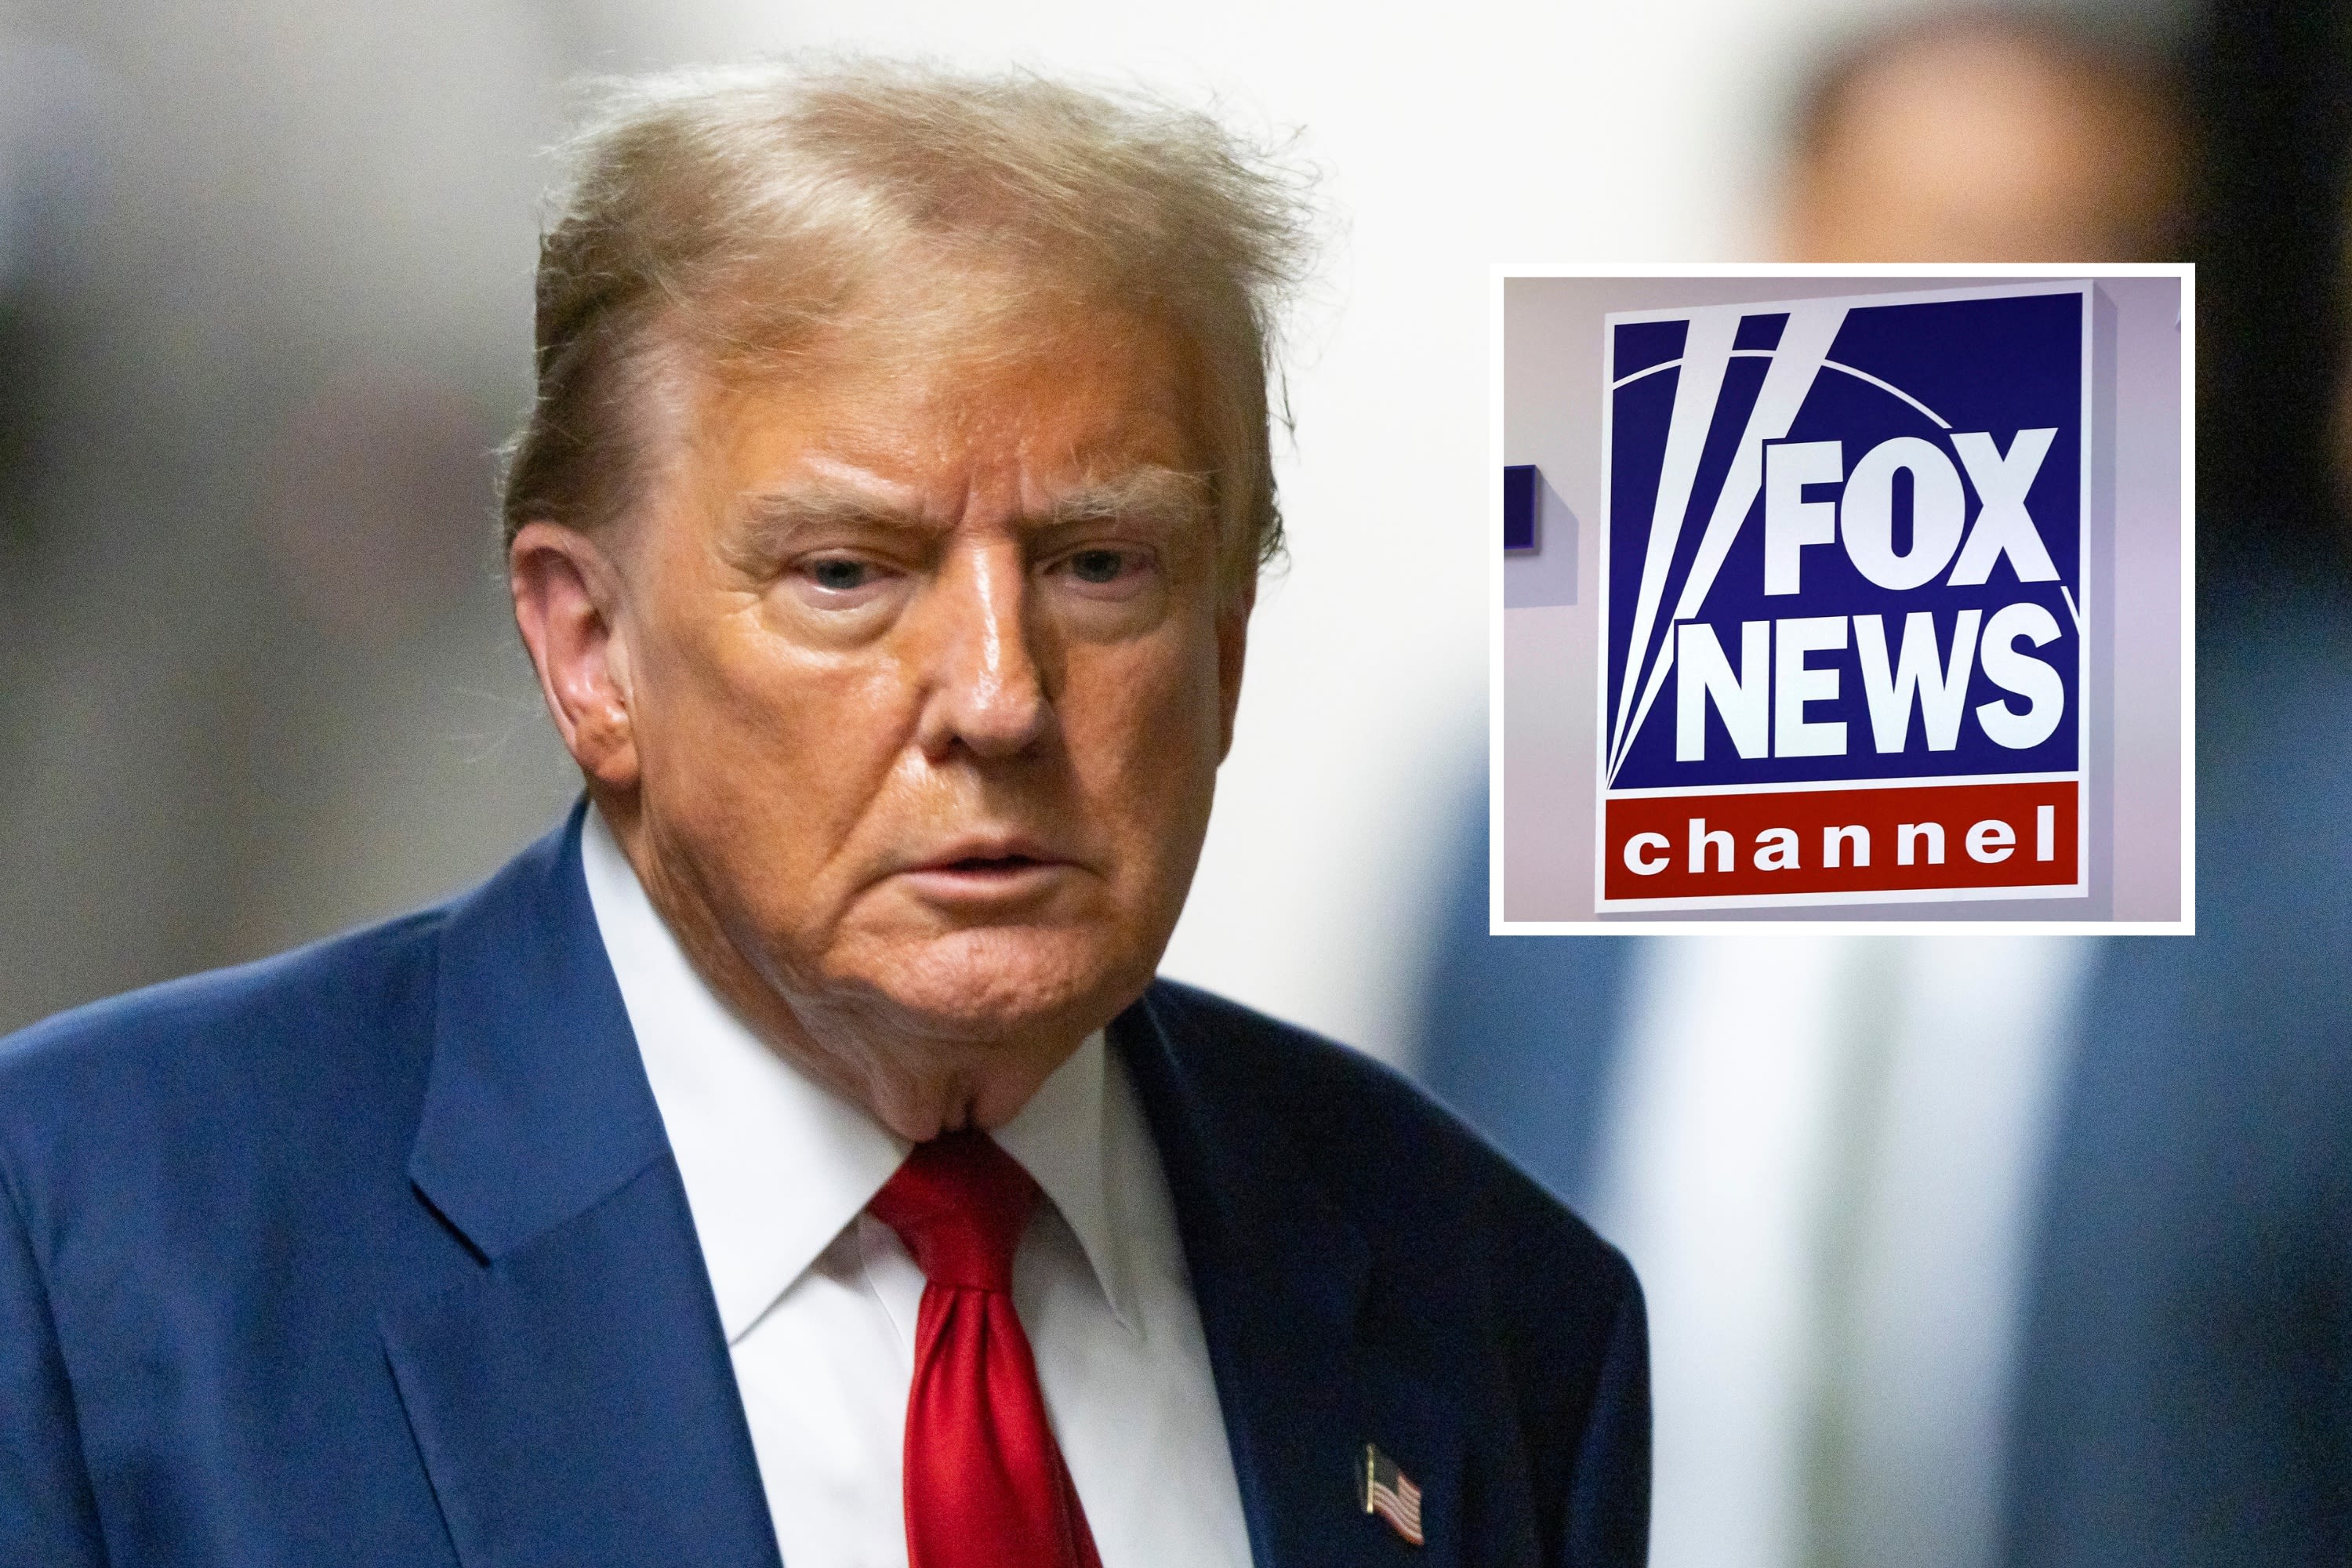 Fox News ratings seesaws during Trump trial